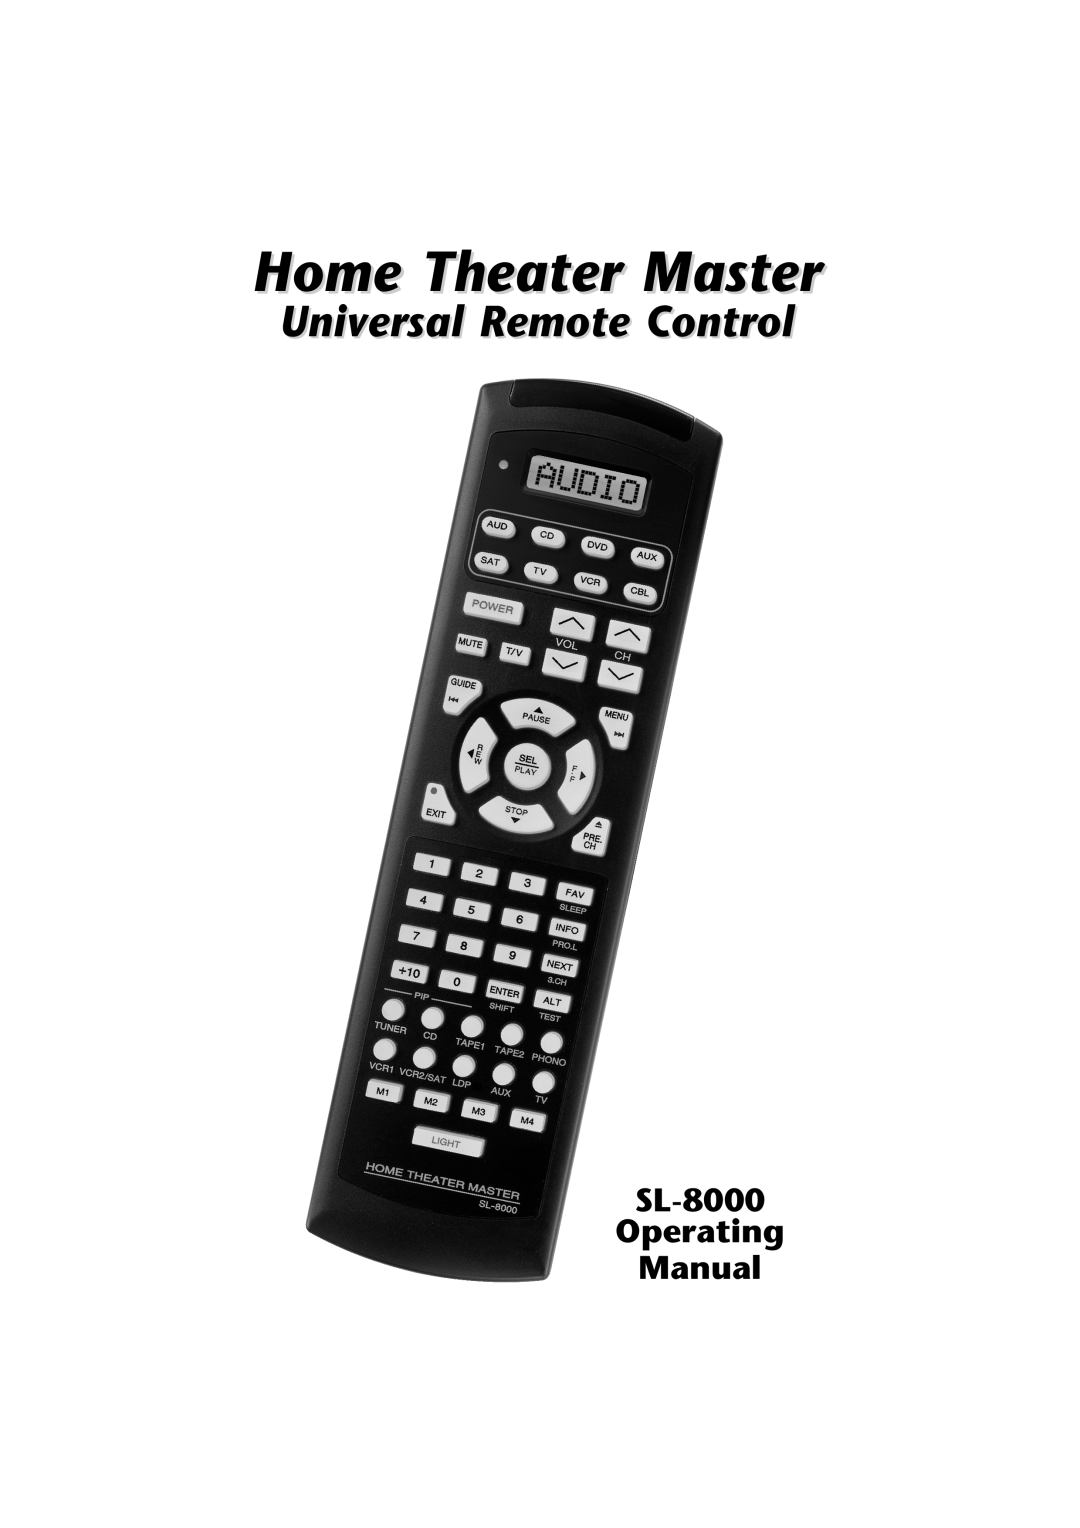 Universal Remote Control manual SL-8000 Operating Manual, Home Theater Master, Universal Remote Control 